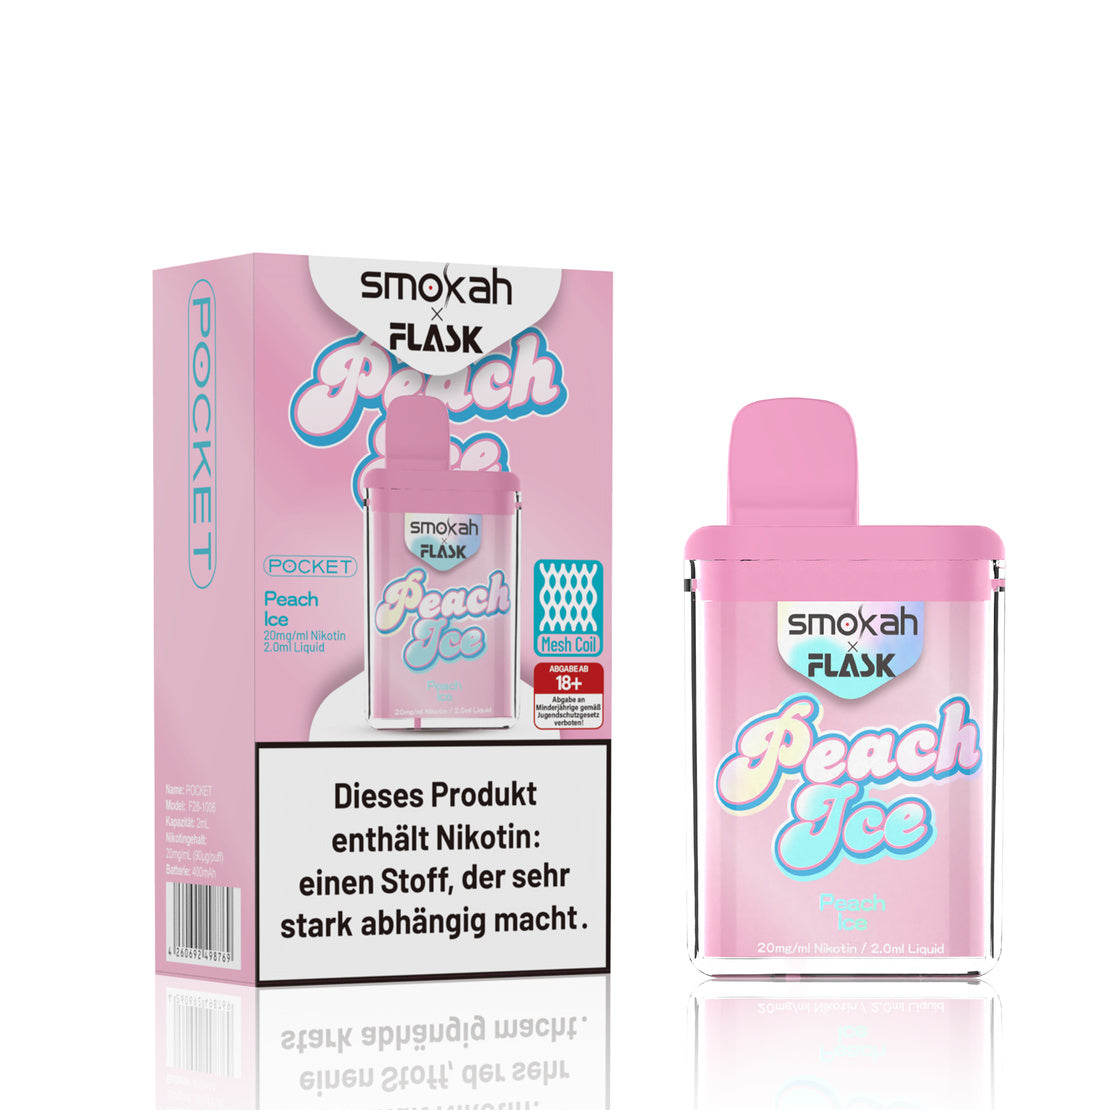 Smokah x Flask Pocket Vape: Pfirsich Ice – Kühle Süße in jedem Zug